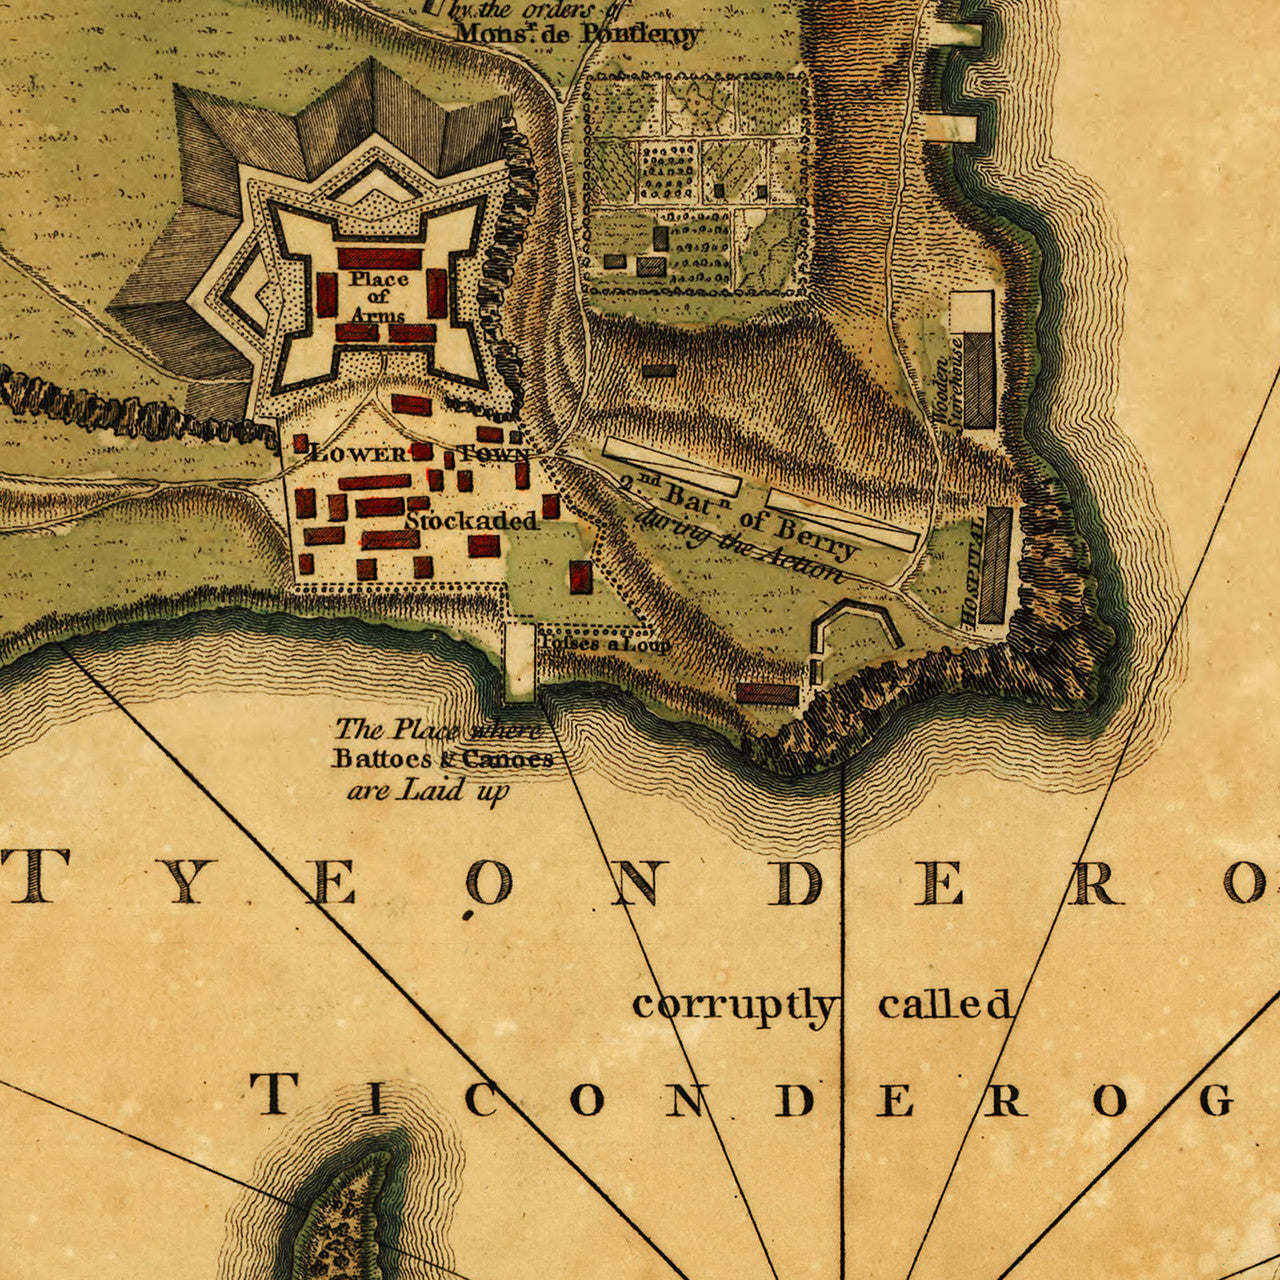 Plan of Fort Ticonderoga, New York, 1758